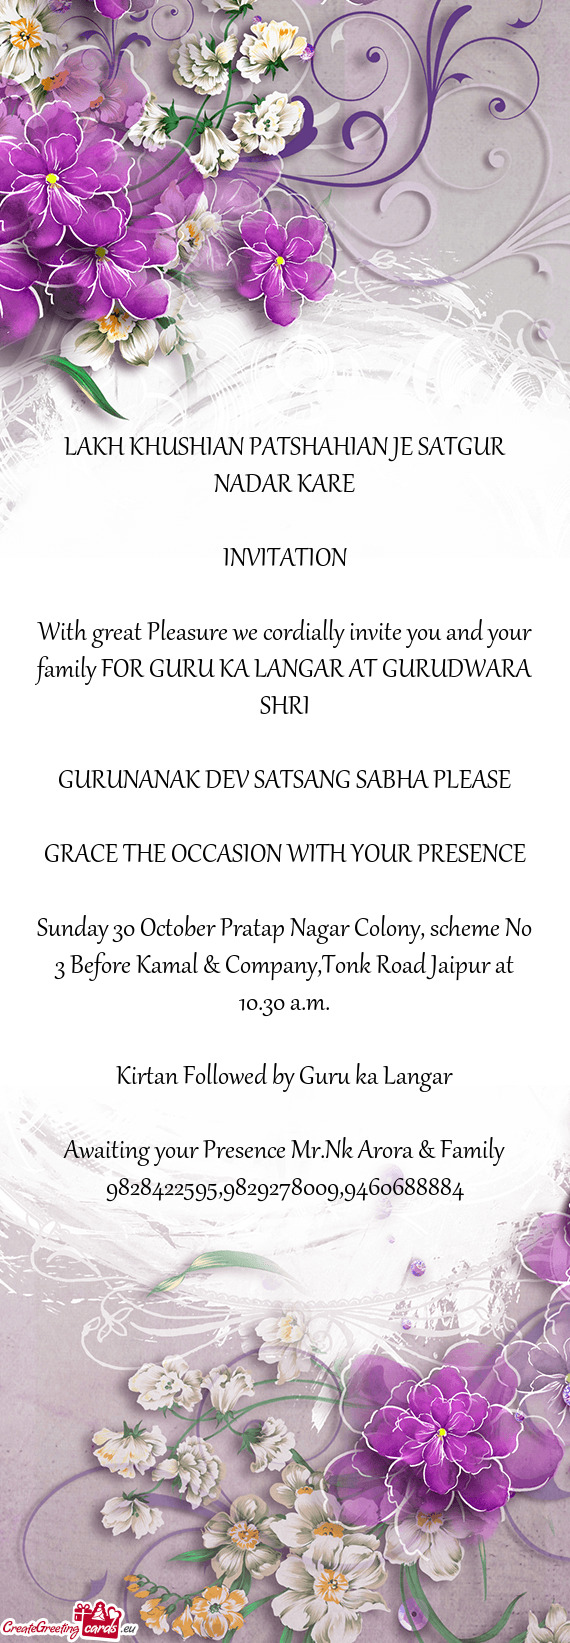 With great Pleasure we cordially invite you and your family FOR GURU KA LANGAR AT GURUDWARA SHRI